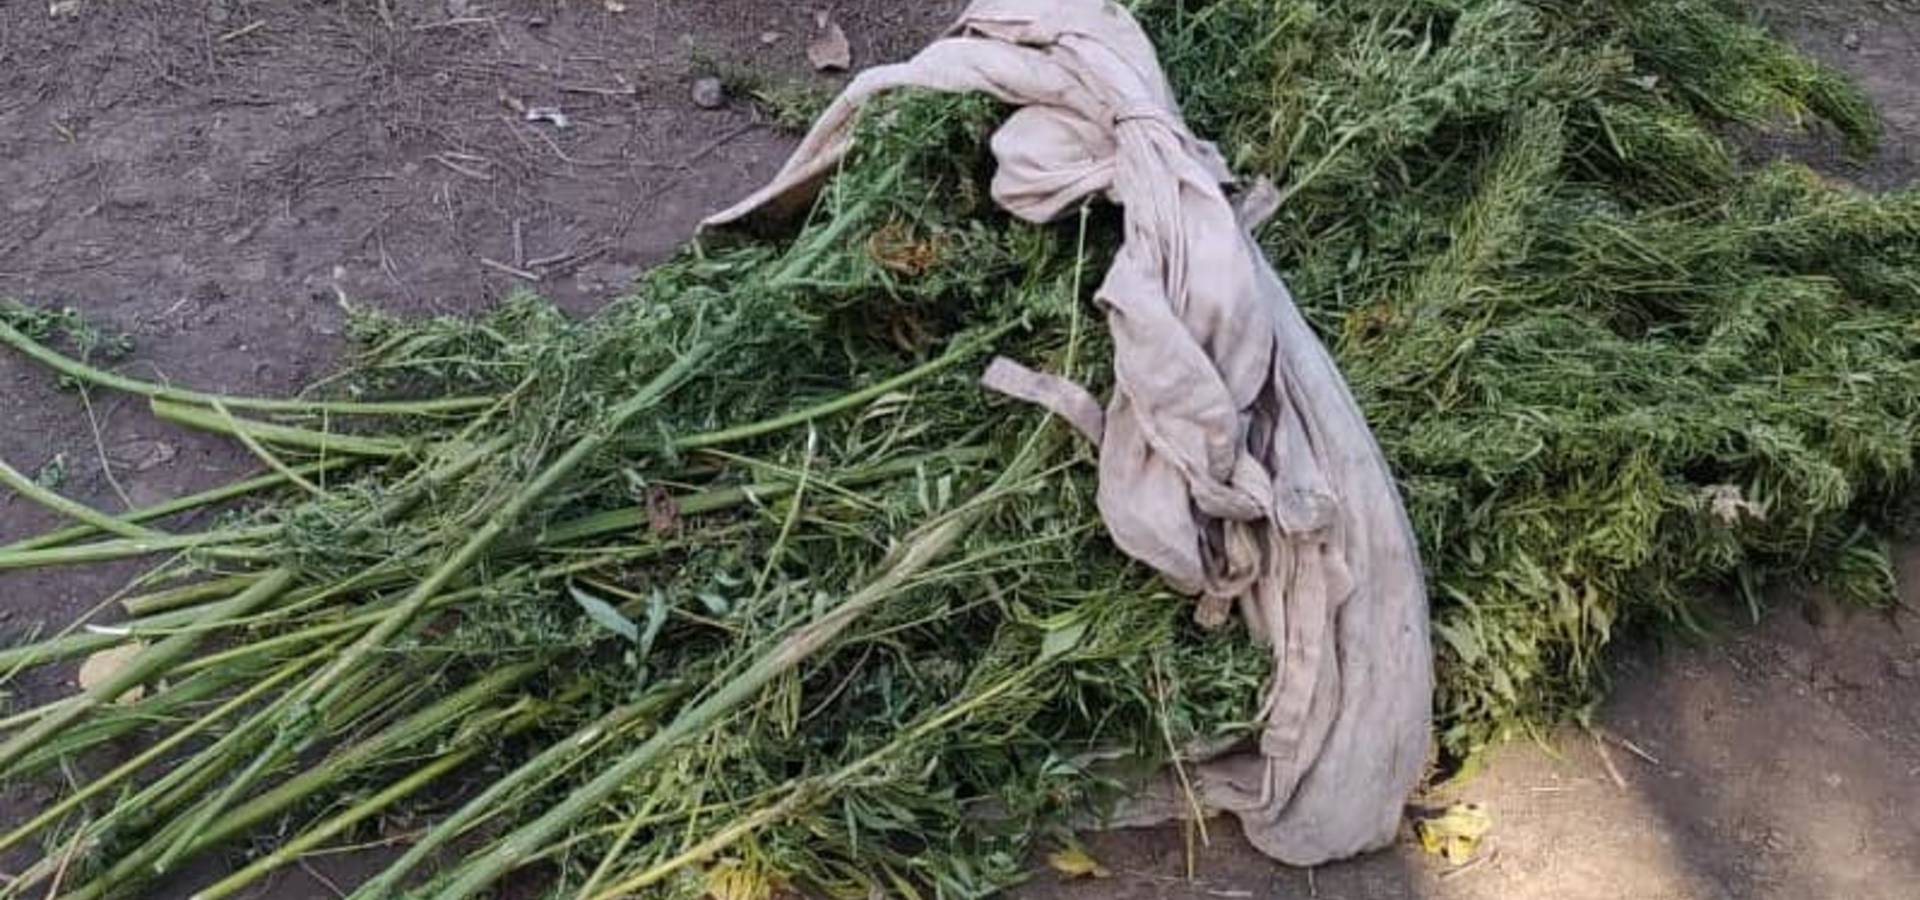 У жителя Хмільницького району знайшли наркотики